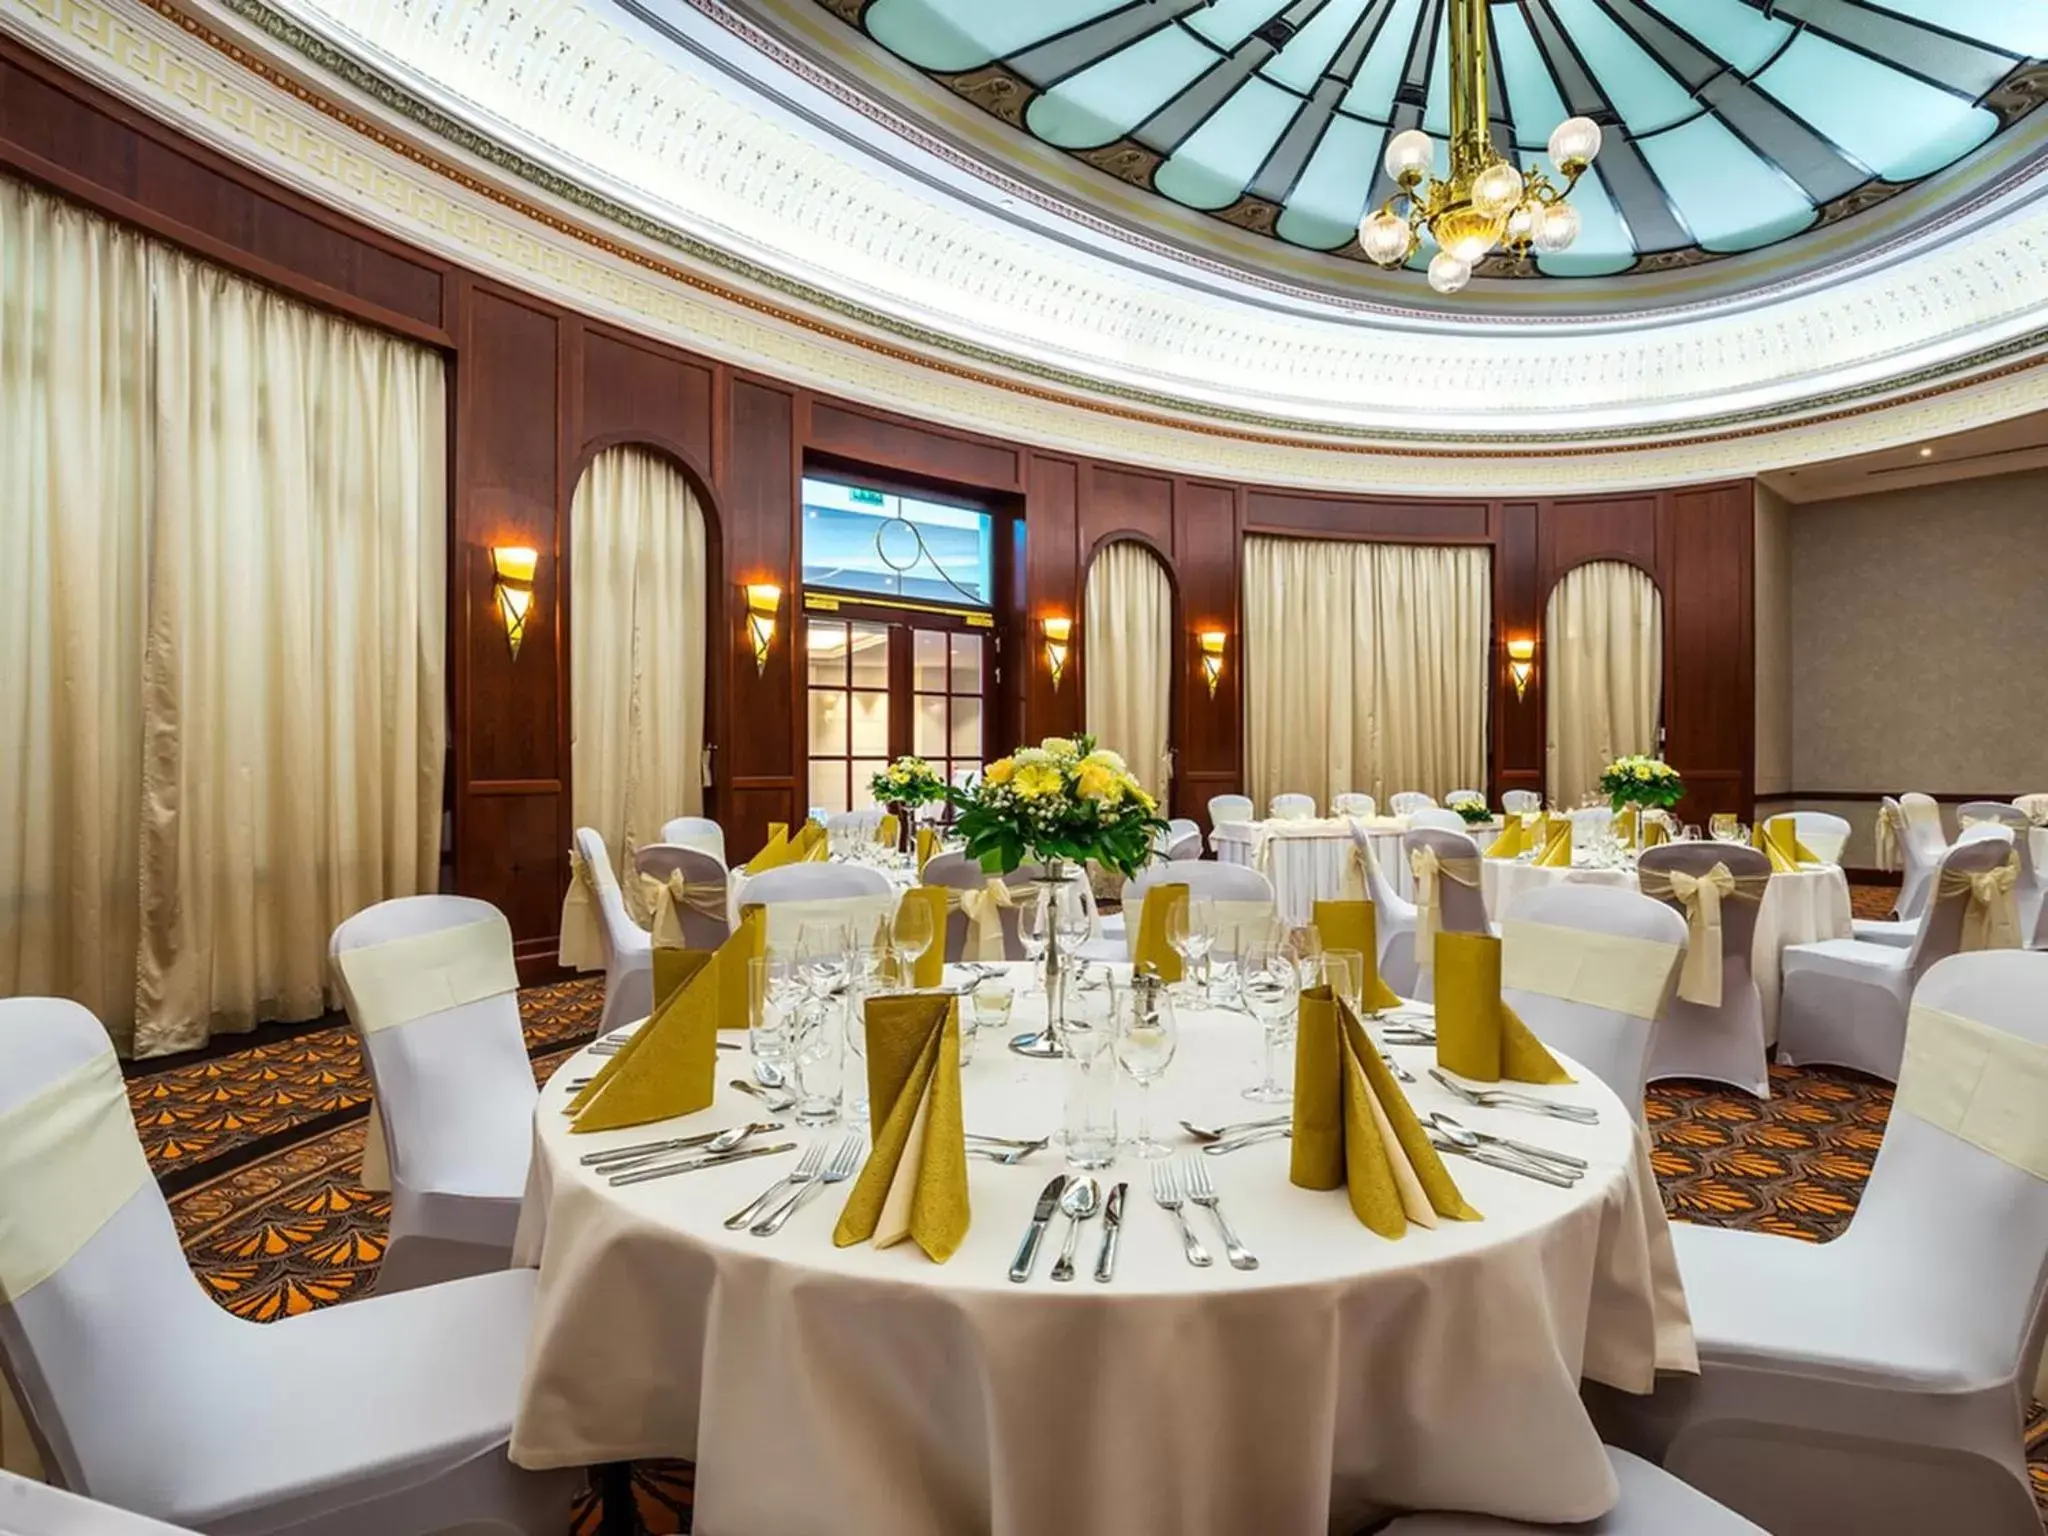 Banquet/Function facilities, Banquet Facilities in Radisson Blu Carlton Hotel, Bratislava